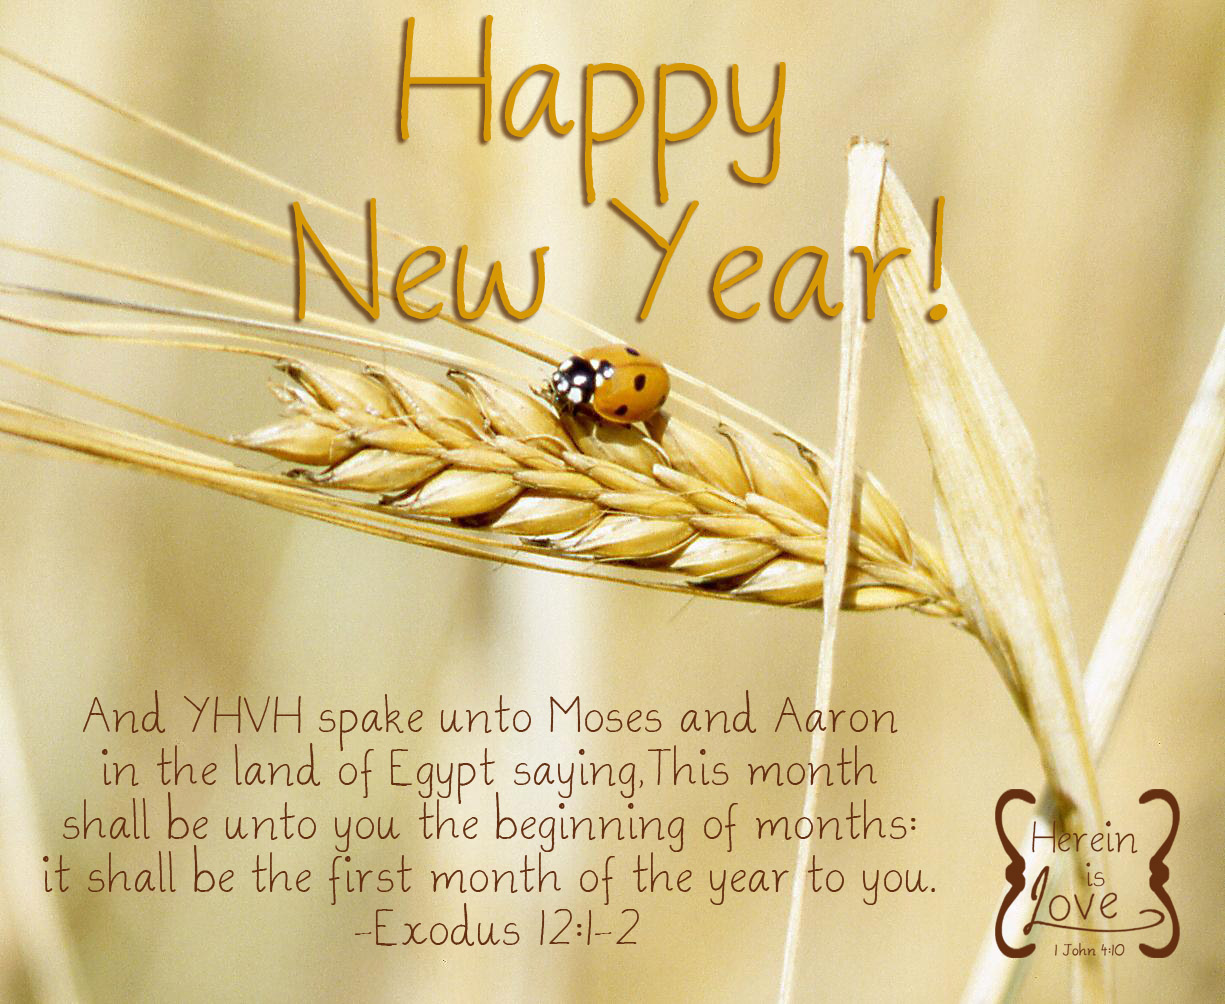 Herein is LOVE Happy *BIBLICAL* New Year!